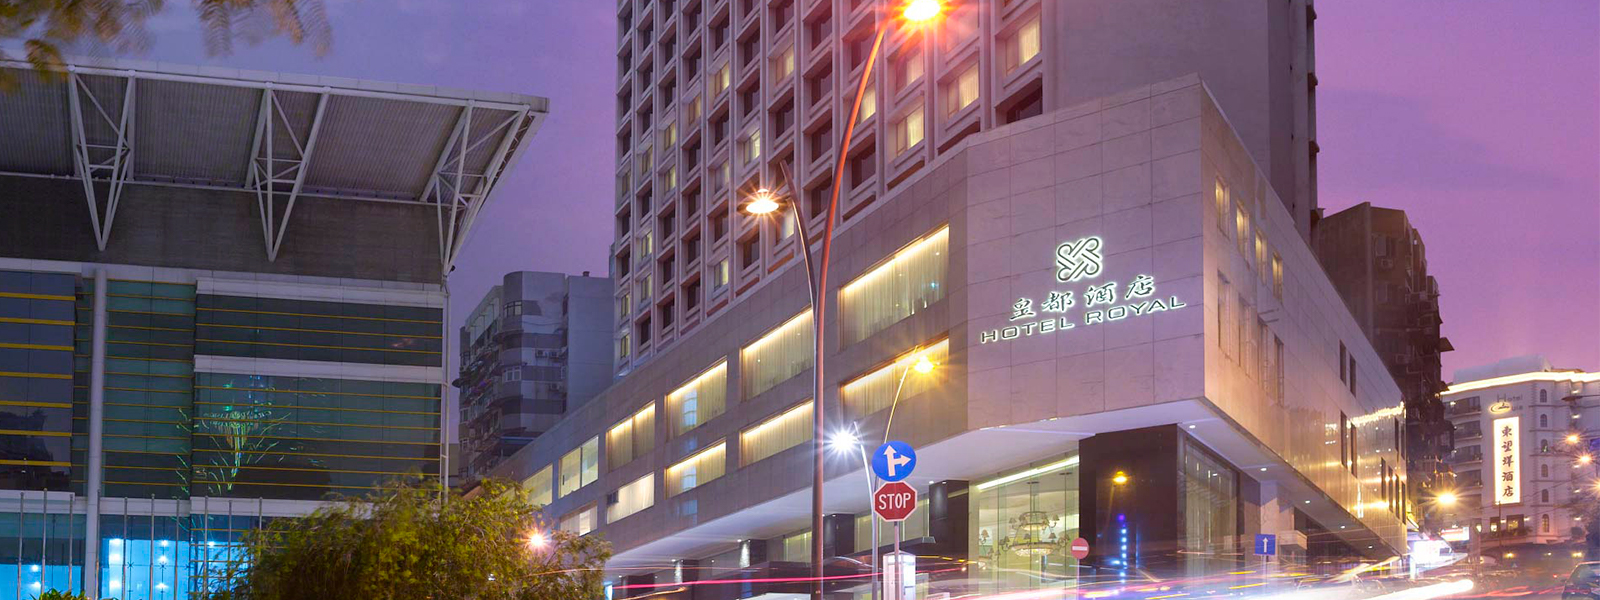 Hotel Royal Macau banner